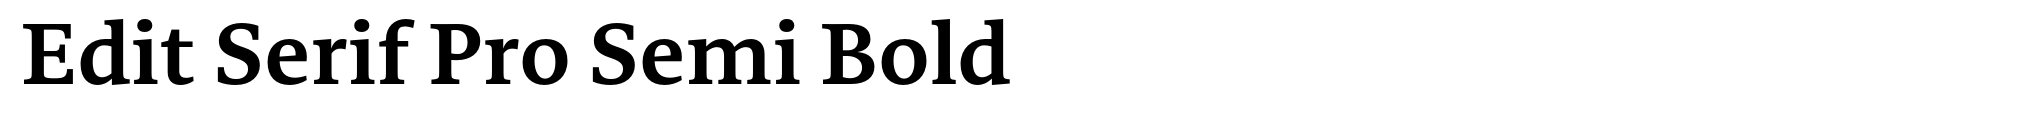 Edit Serif Pro Semi Bold image